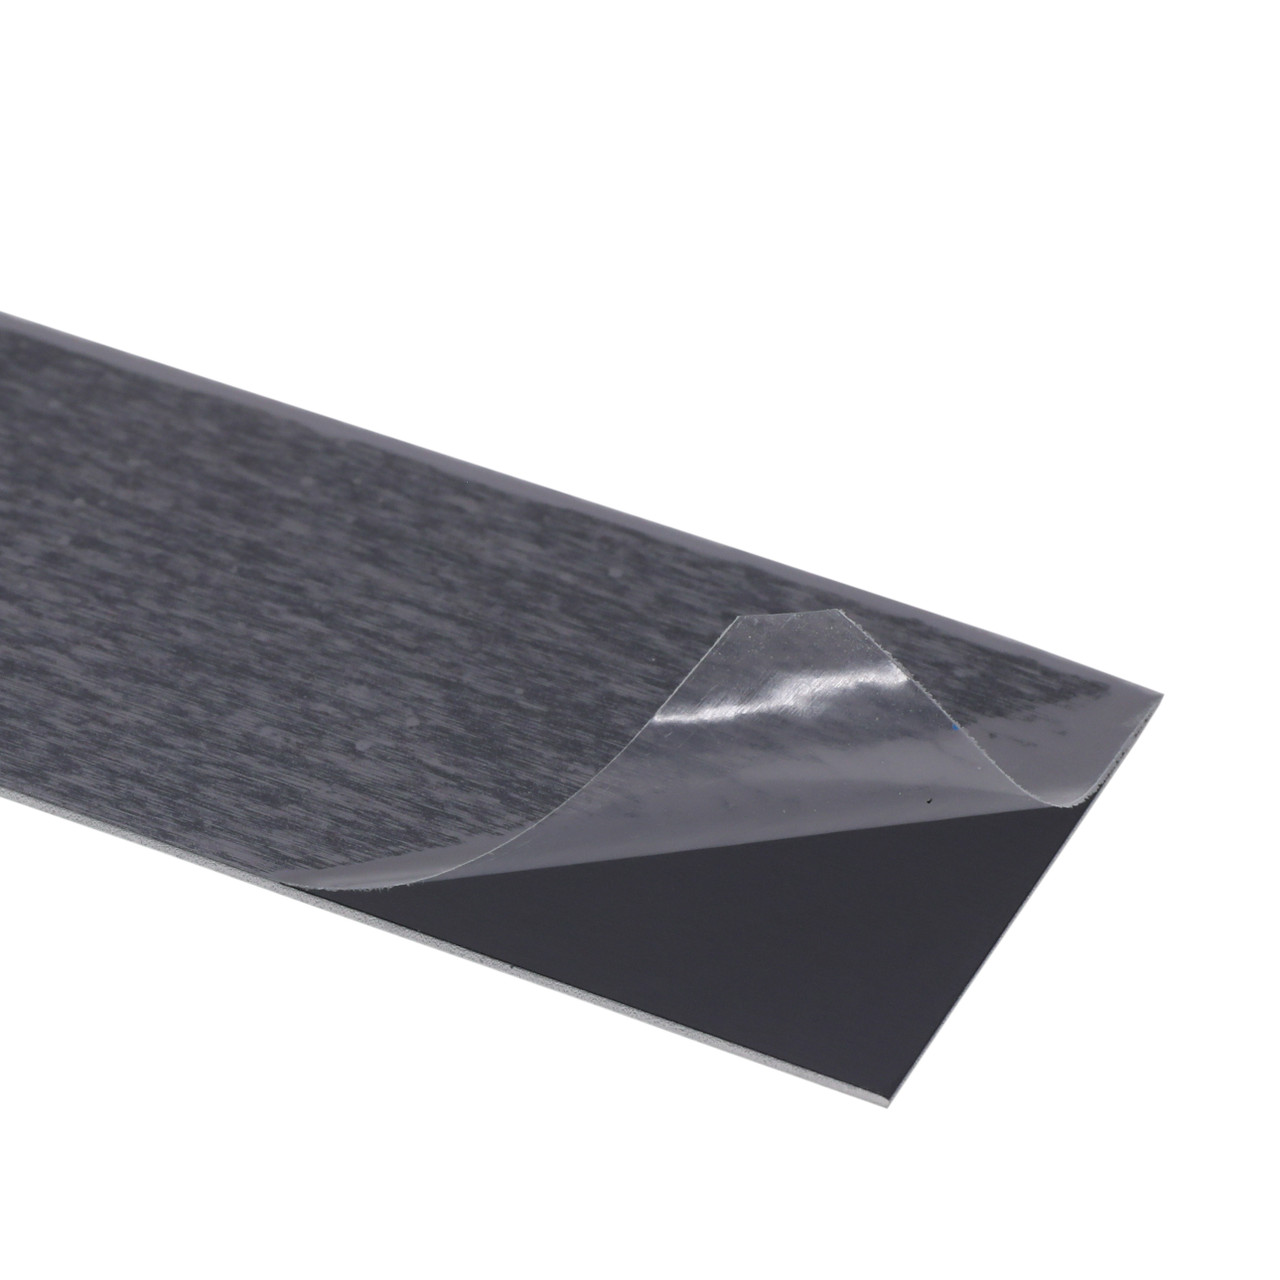 Sheet, anodized aluminum, black, 5-3/4 x 5-3/4 inch square, 26